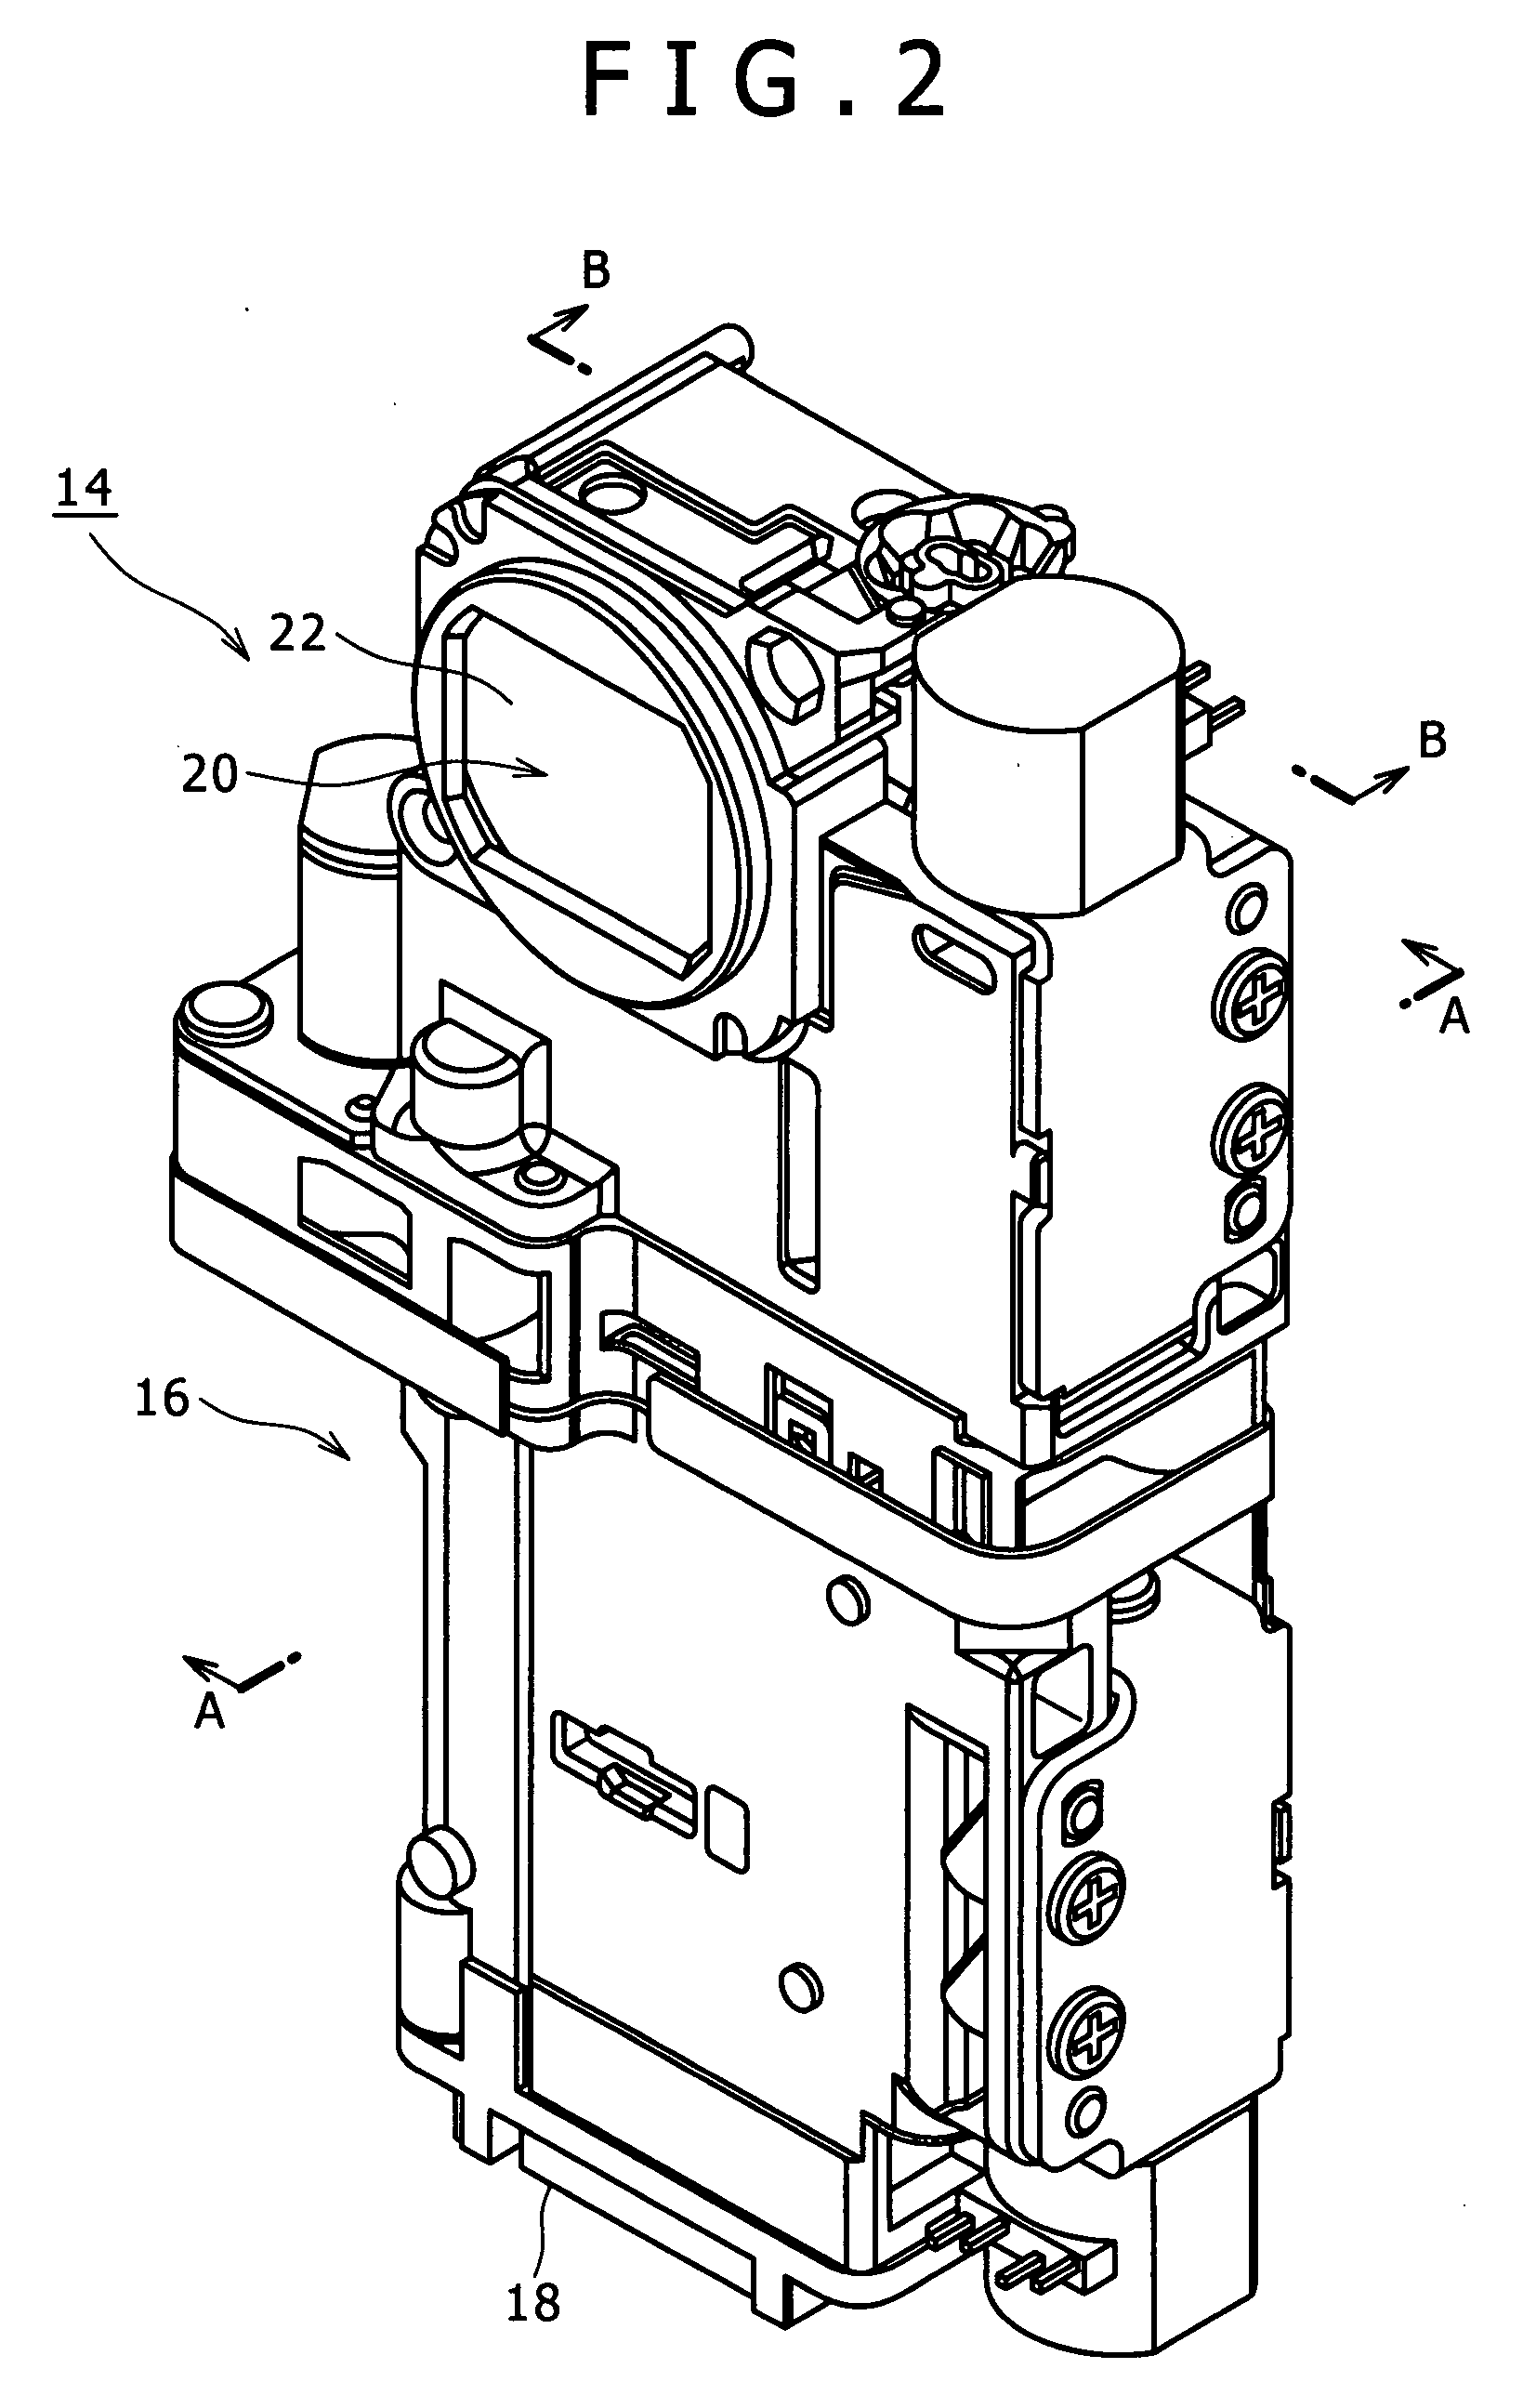 Adapter lens